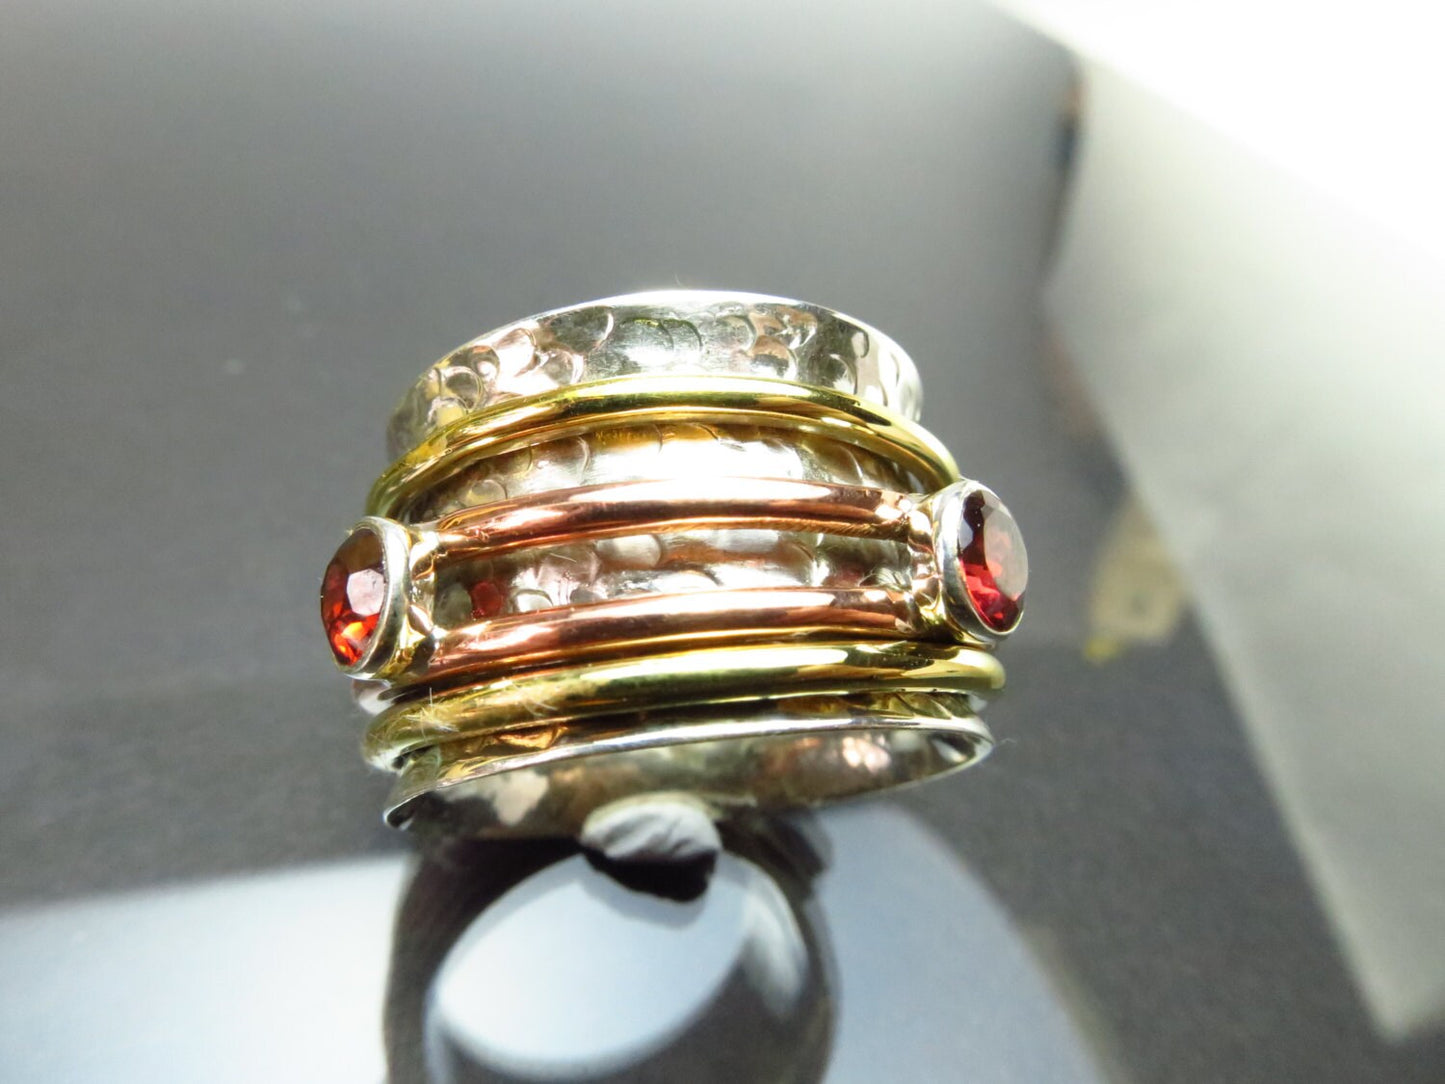 Spinner Ring Meditation Ring Garnet Worry ring stacking Unisex Size 9 gemstone 925 Silver birthstone november gift present birthday